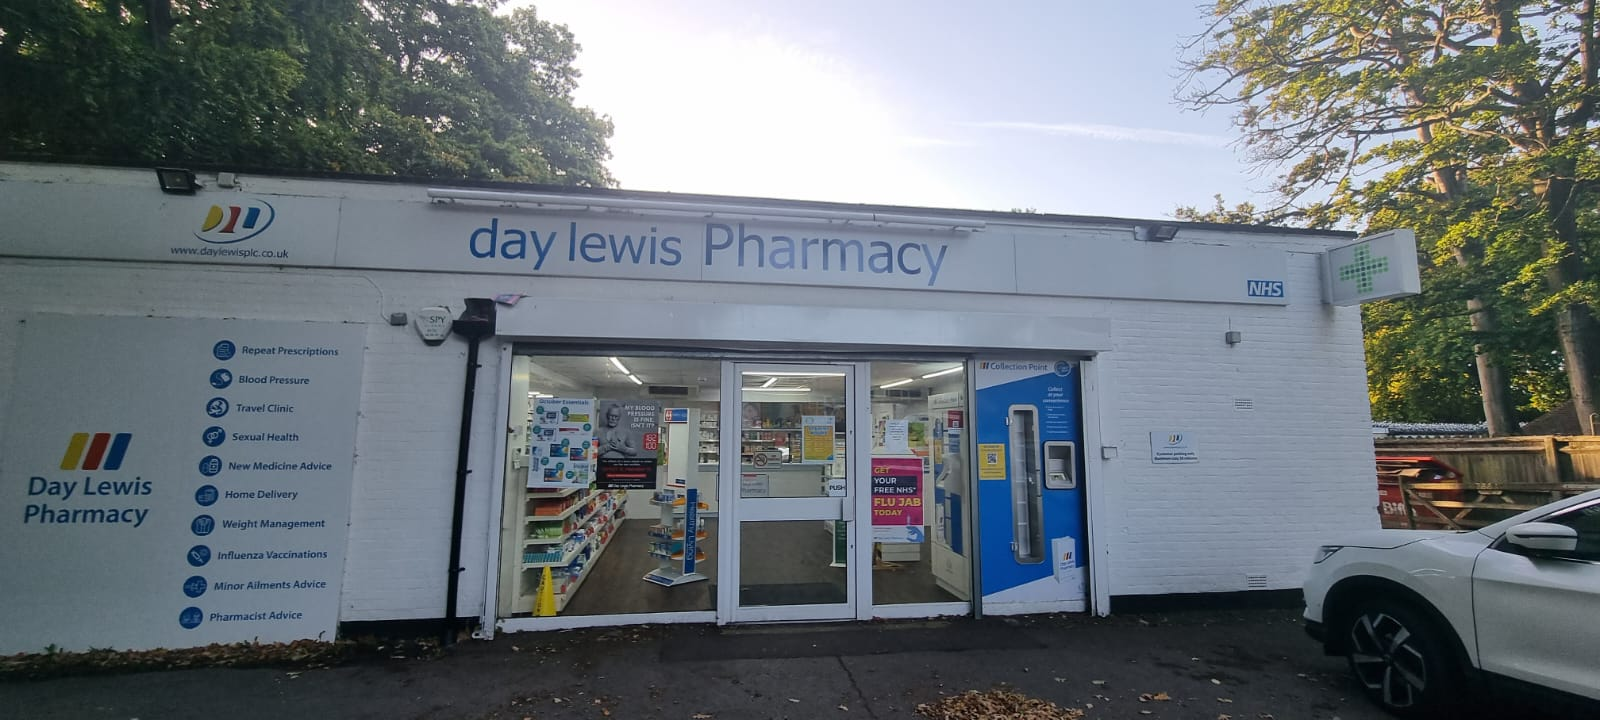 Day Lewis Pharmacy Lordswood Southampton 02380 780115